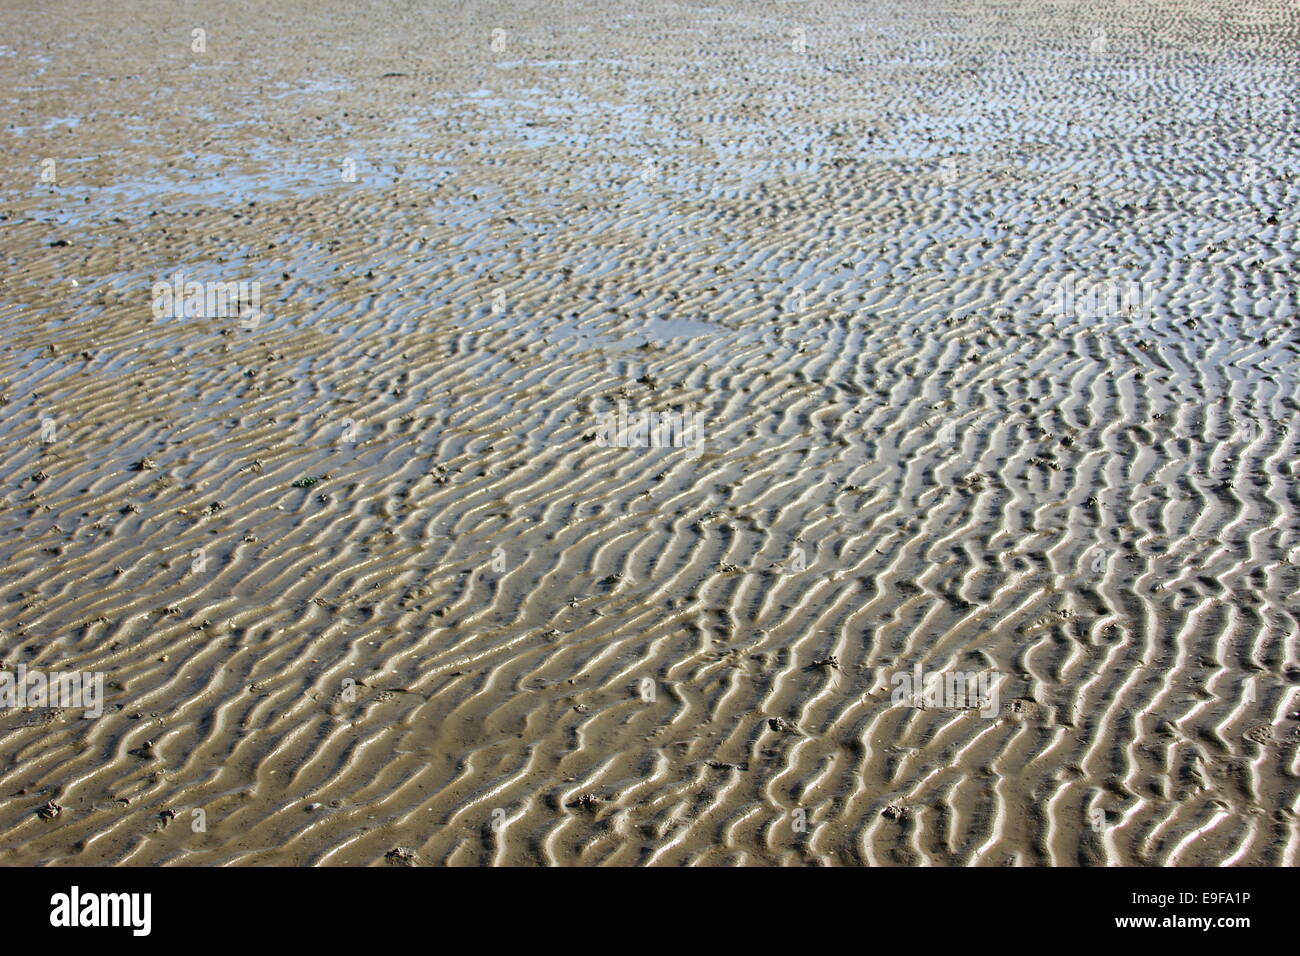 The North Sea mud with lugworm heaps Stock Photo